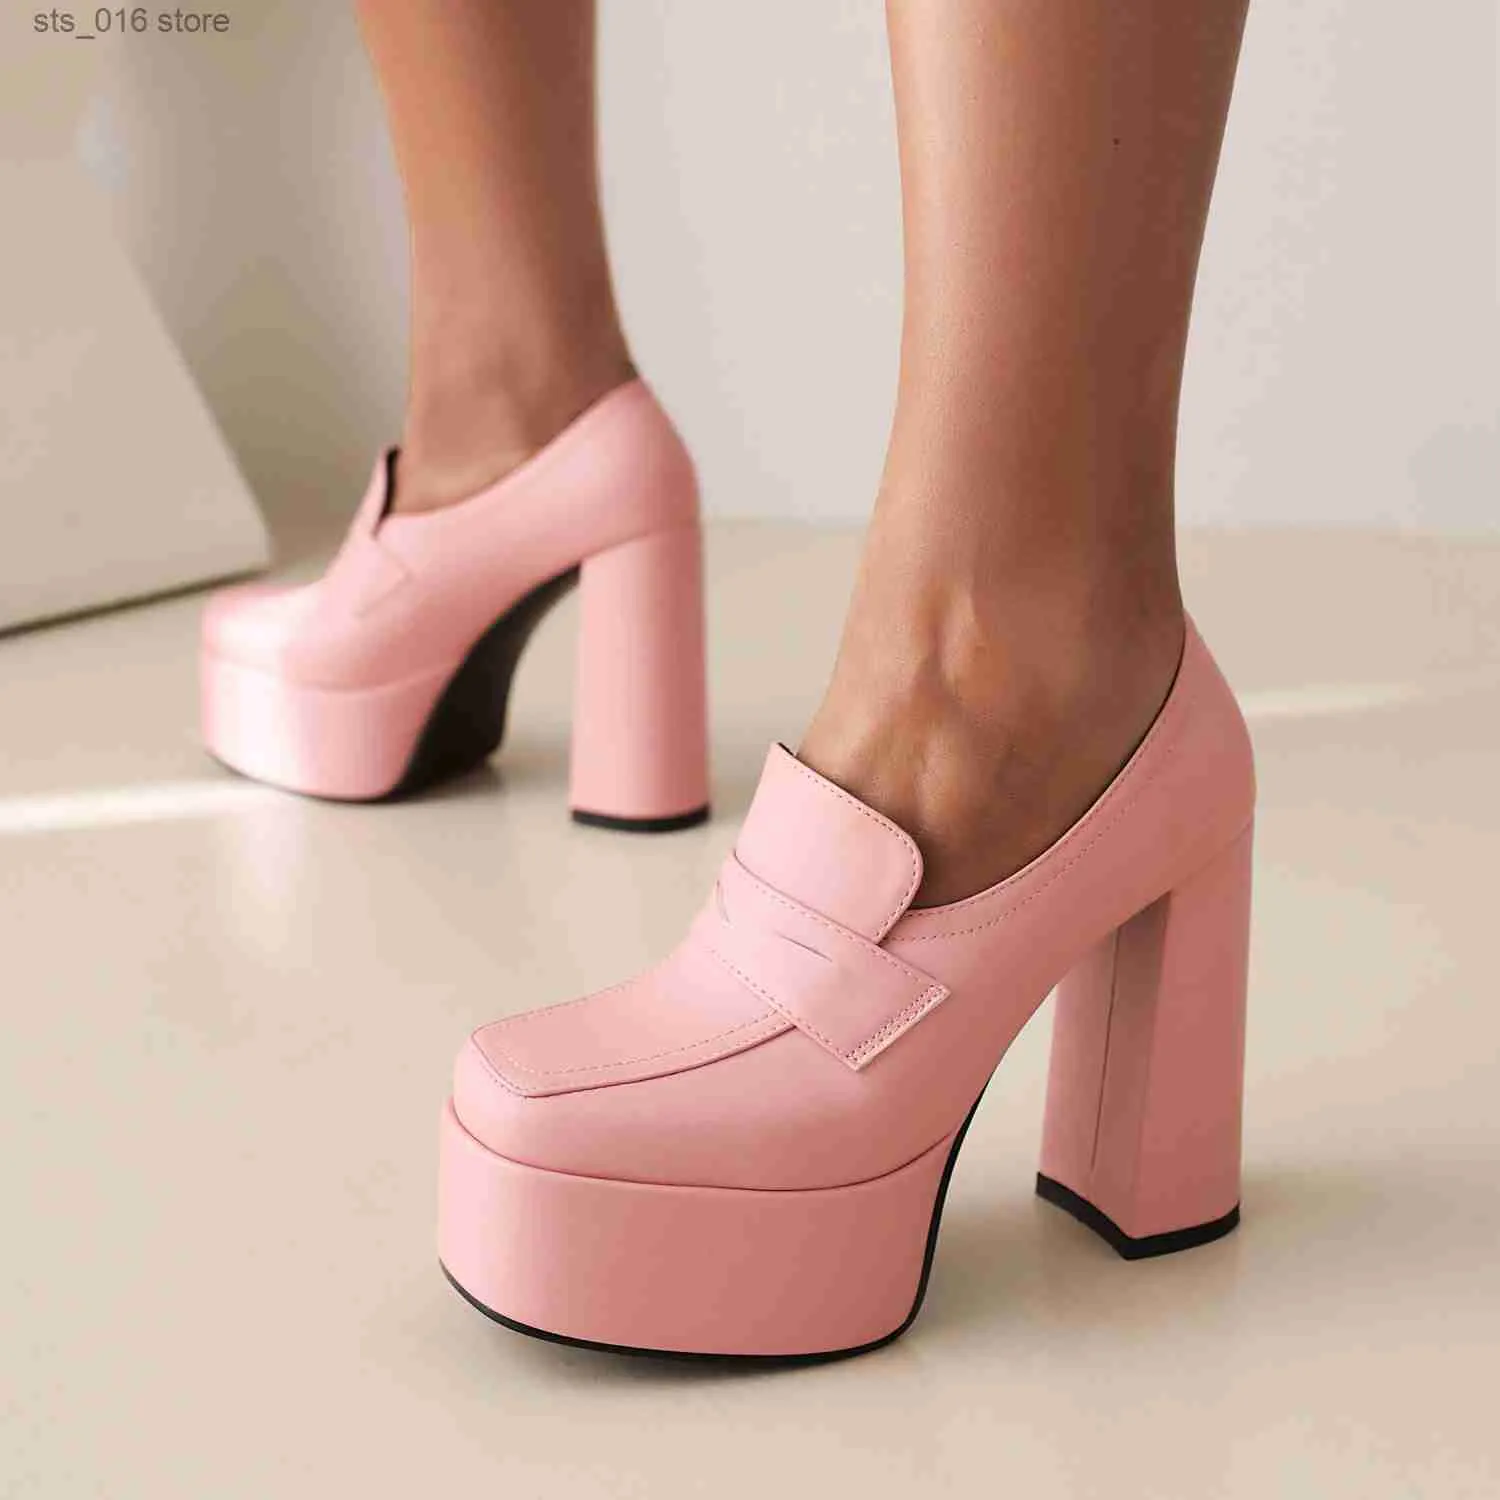 Platform Dress Pumps Fashion High Autumn Pink Women White Soft Leather Square Toe Thick Heels Party Woman Office Shoes Plus Size 34-43 T230829 808